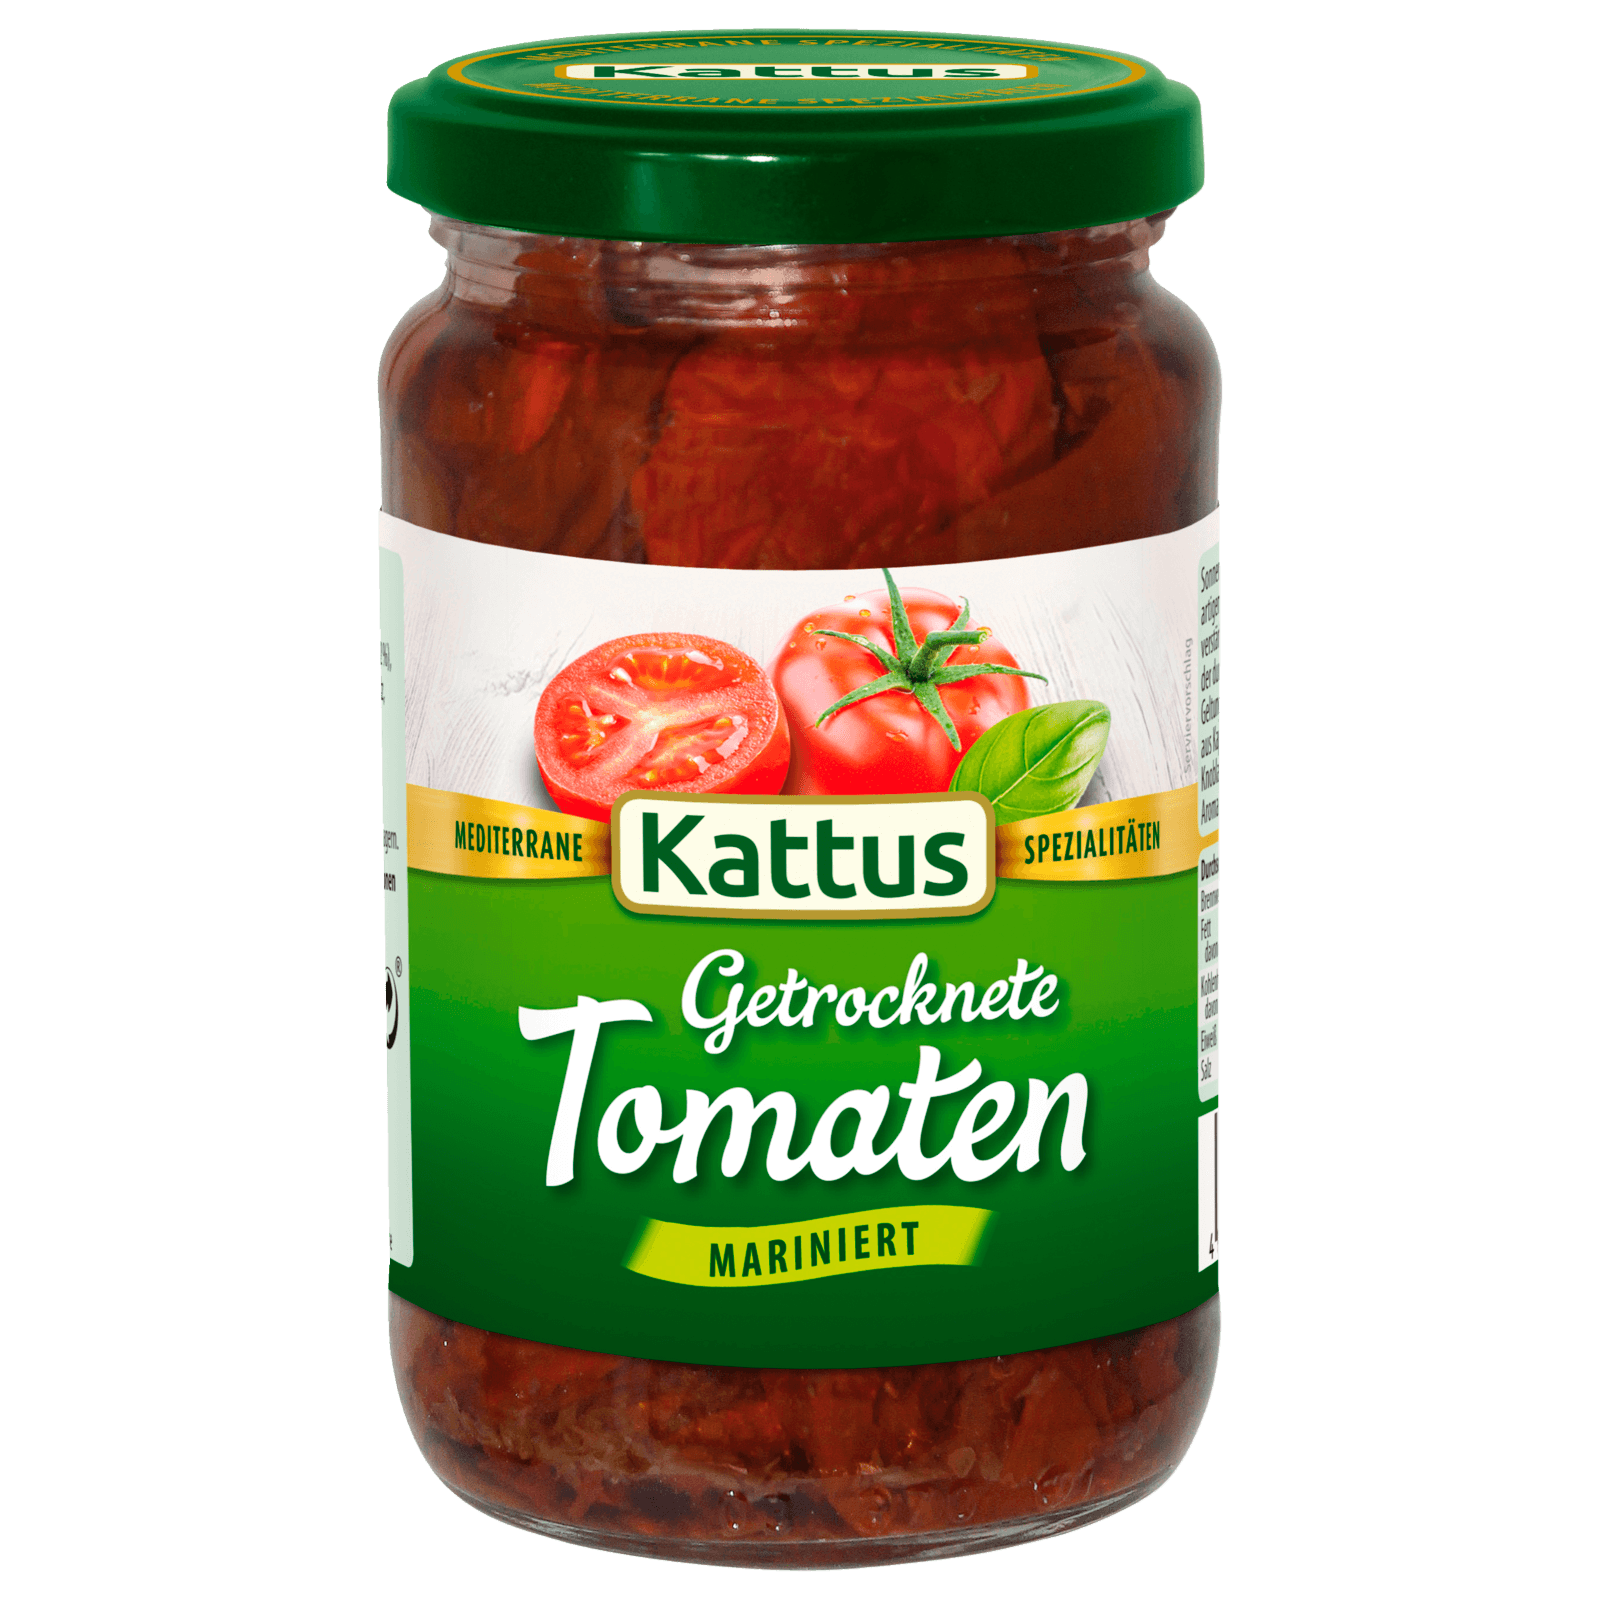 Kattus Getrocknete Tomaten in Öl 340g bei REWE online bestellen!